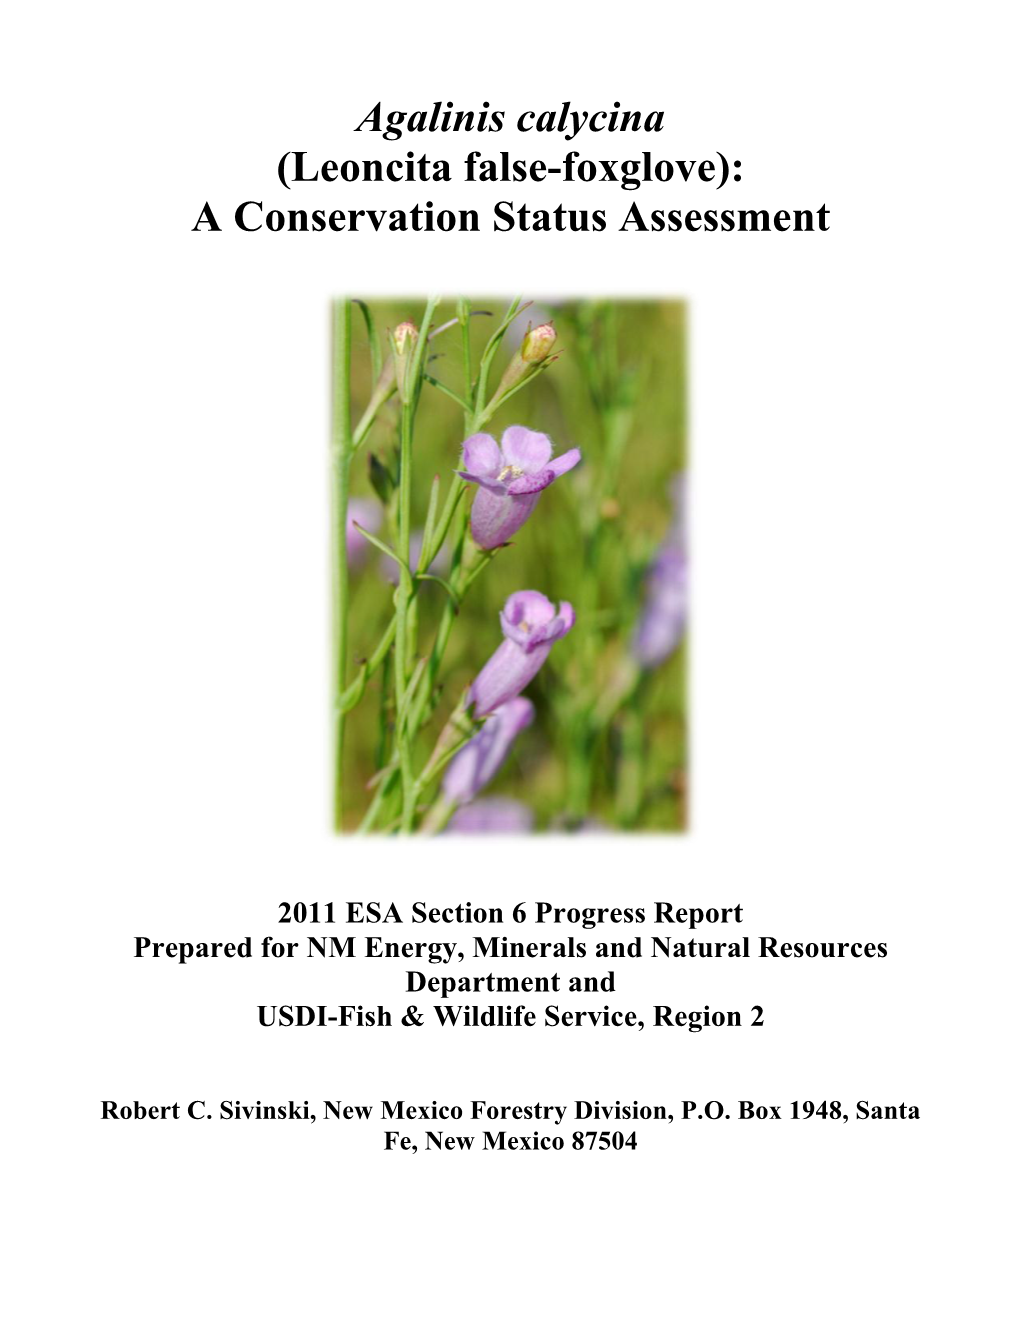 Agalinis Calycina (Leoncita False-Foxglove): a Conservation Status Assessment